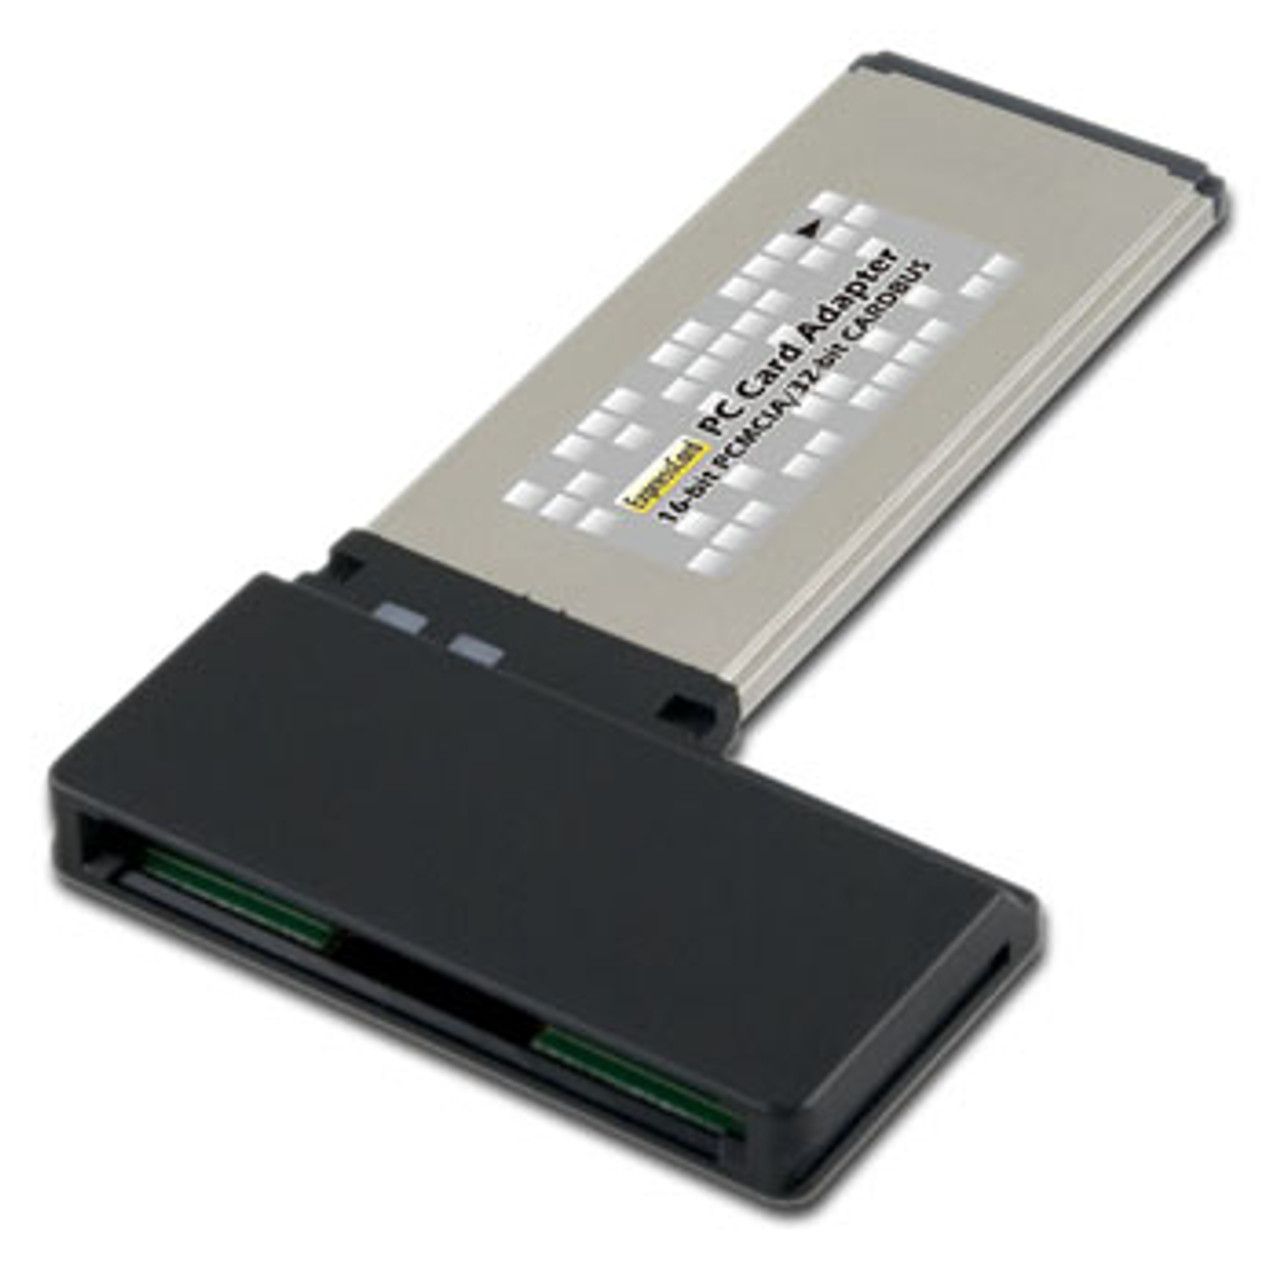 CBECA-C03 (ExpressCard/34 to CardBus/PCMCIA Card Adapter) - M-FACTORS  Storage